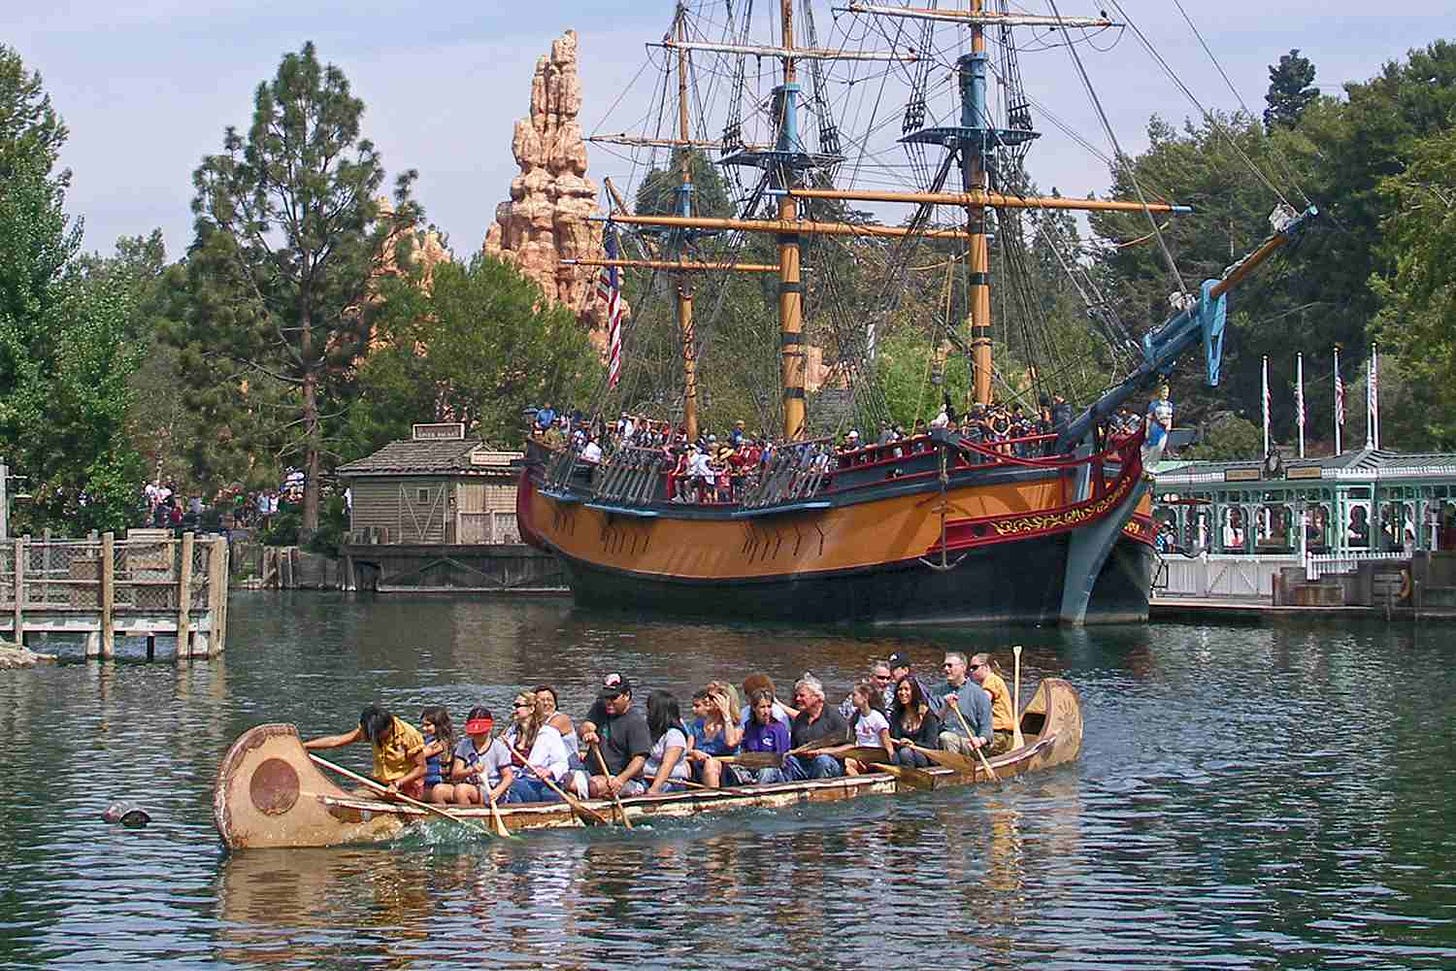 Davy Crockett Canoes at Disneyland: Things to Know